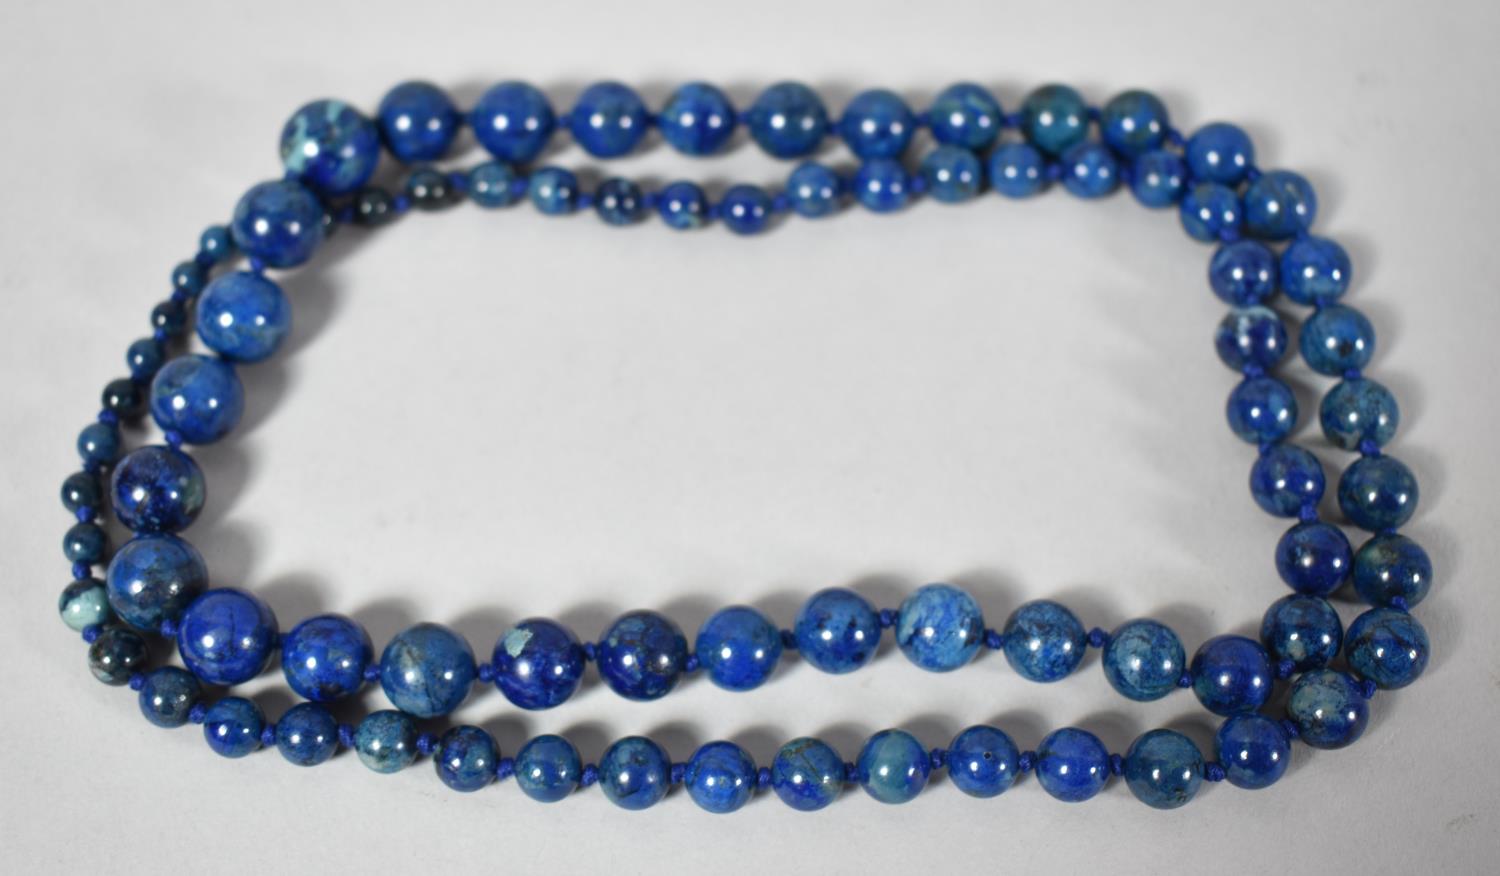 A Graduated String of Lapis Lazuli Beads, 88cm Long